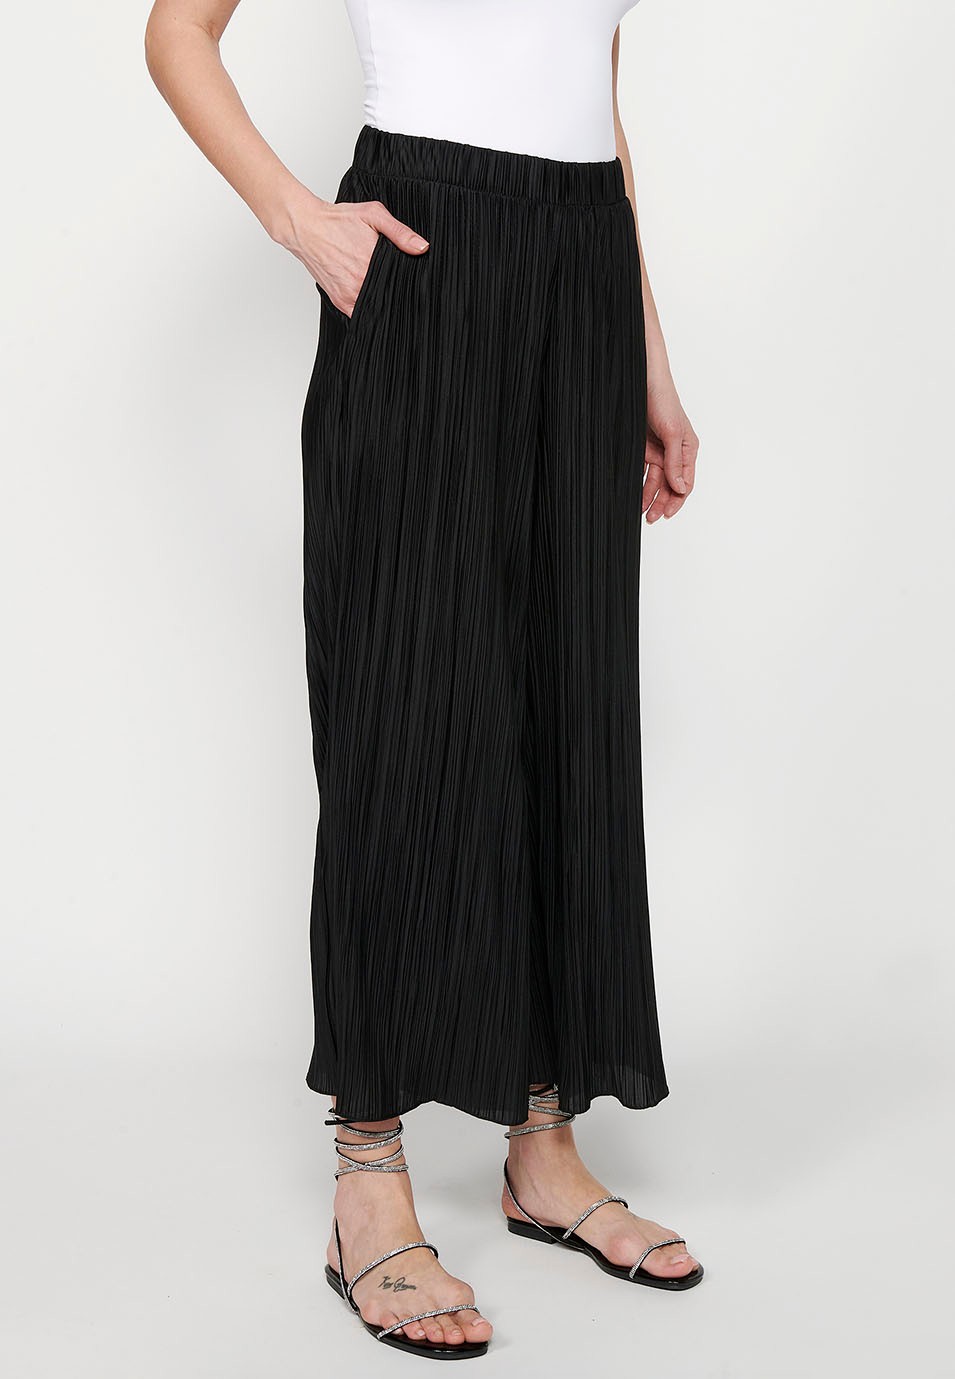 Lightweight long pants, rubberized waist, black pleated fabric for women